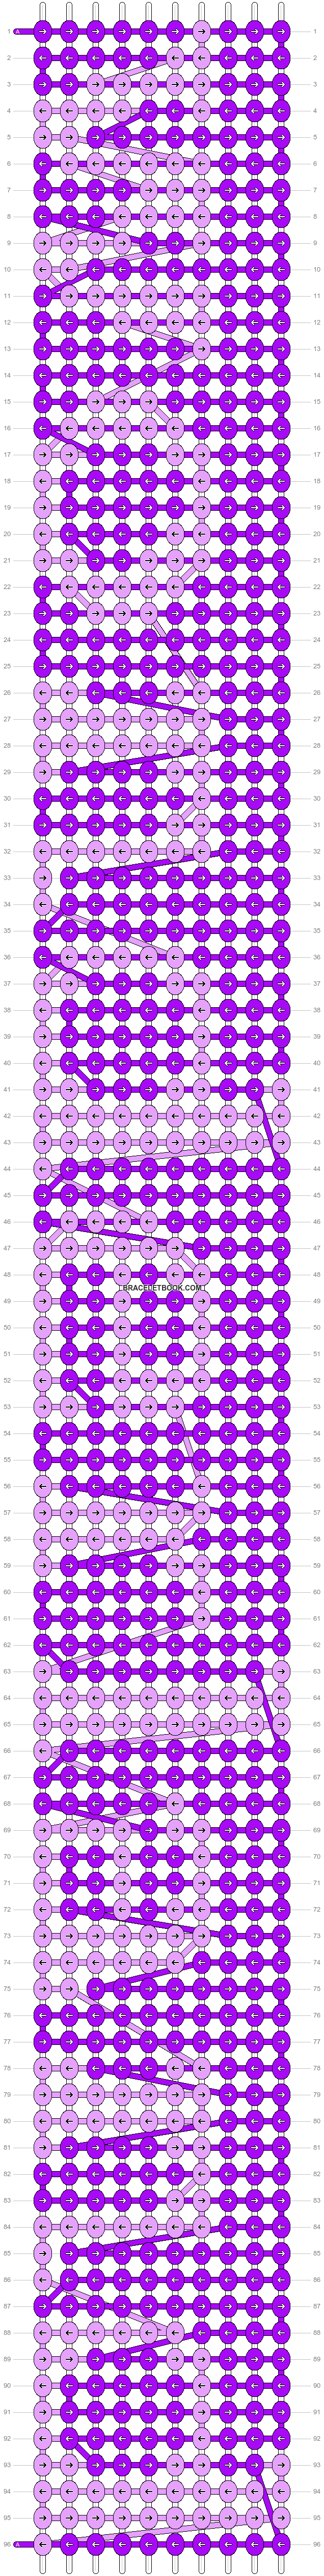 Alpha pattern #13415 variation #122871 pattern